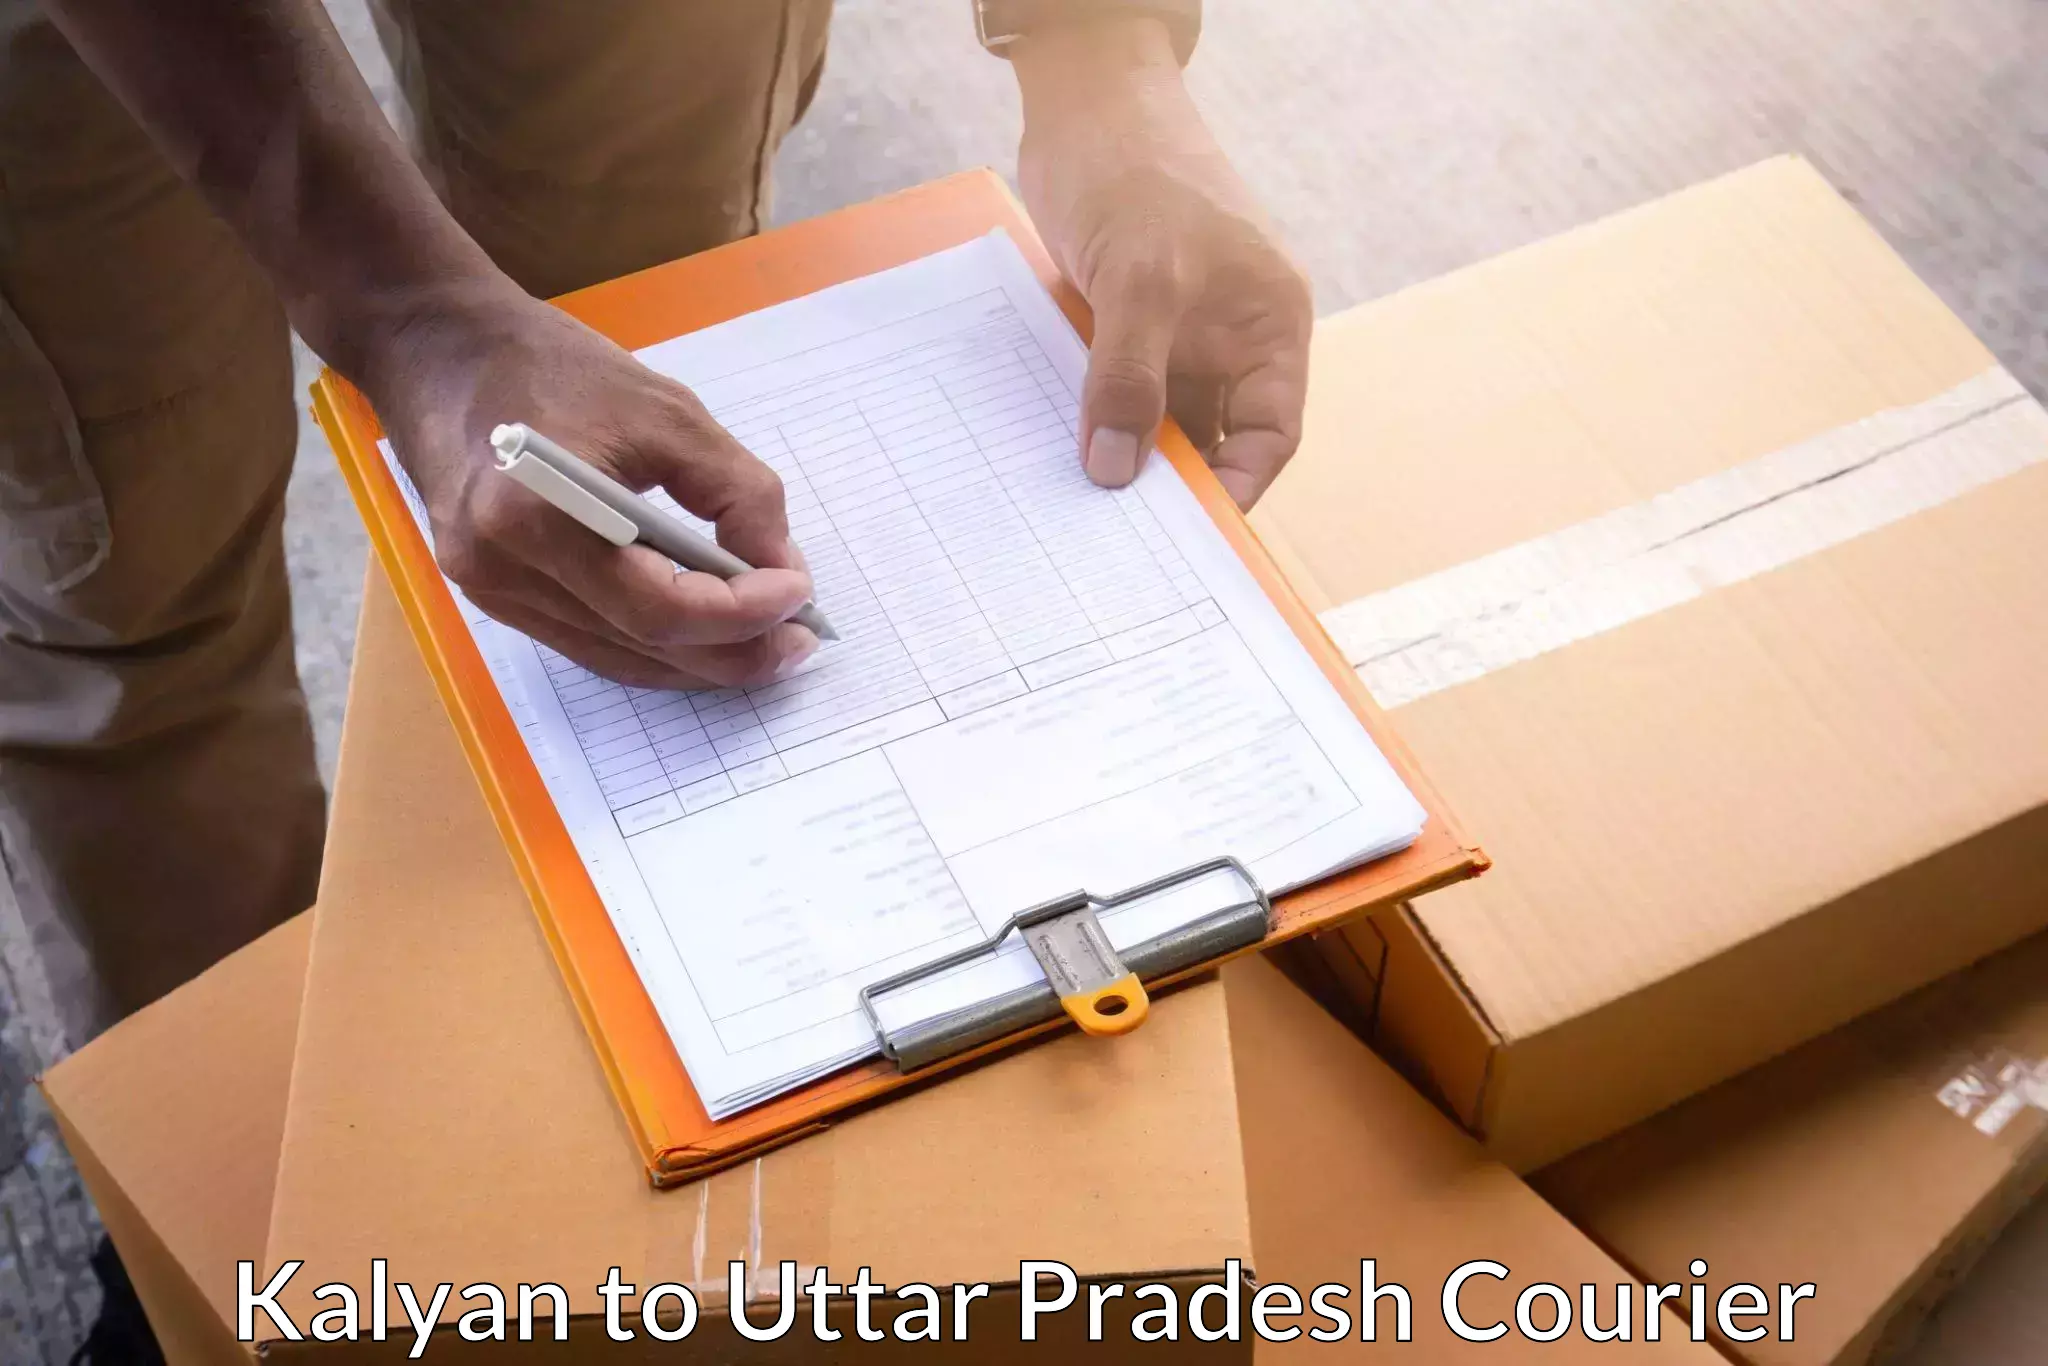 Courier service comparison in Kalyan to Ambedkar Nagar